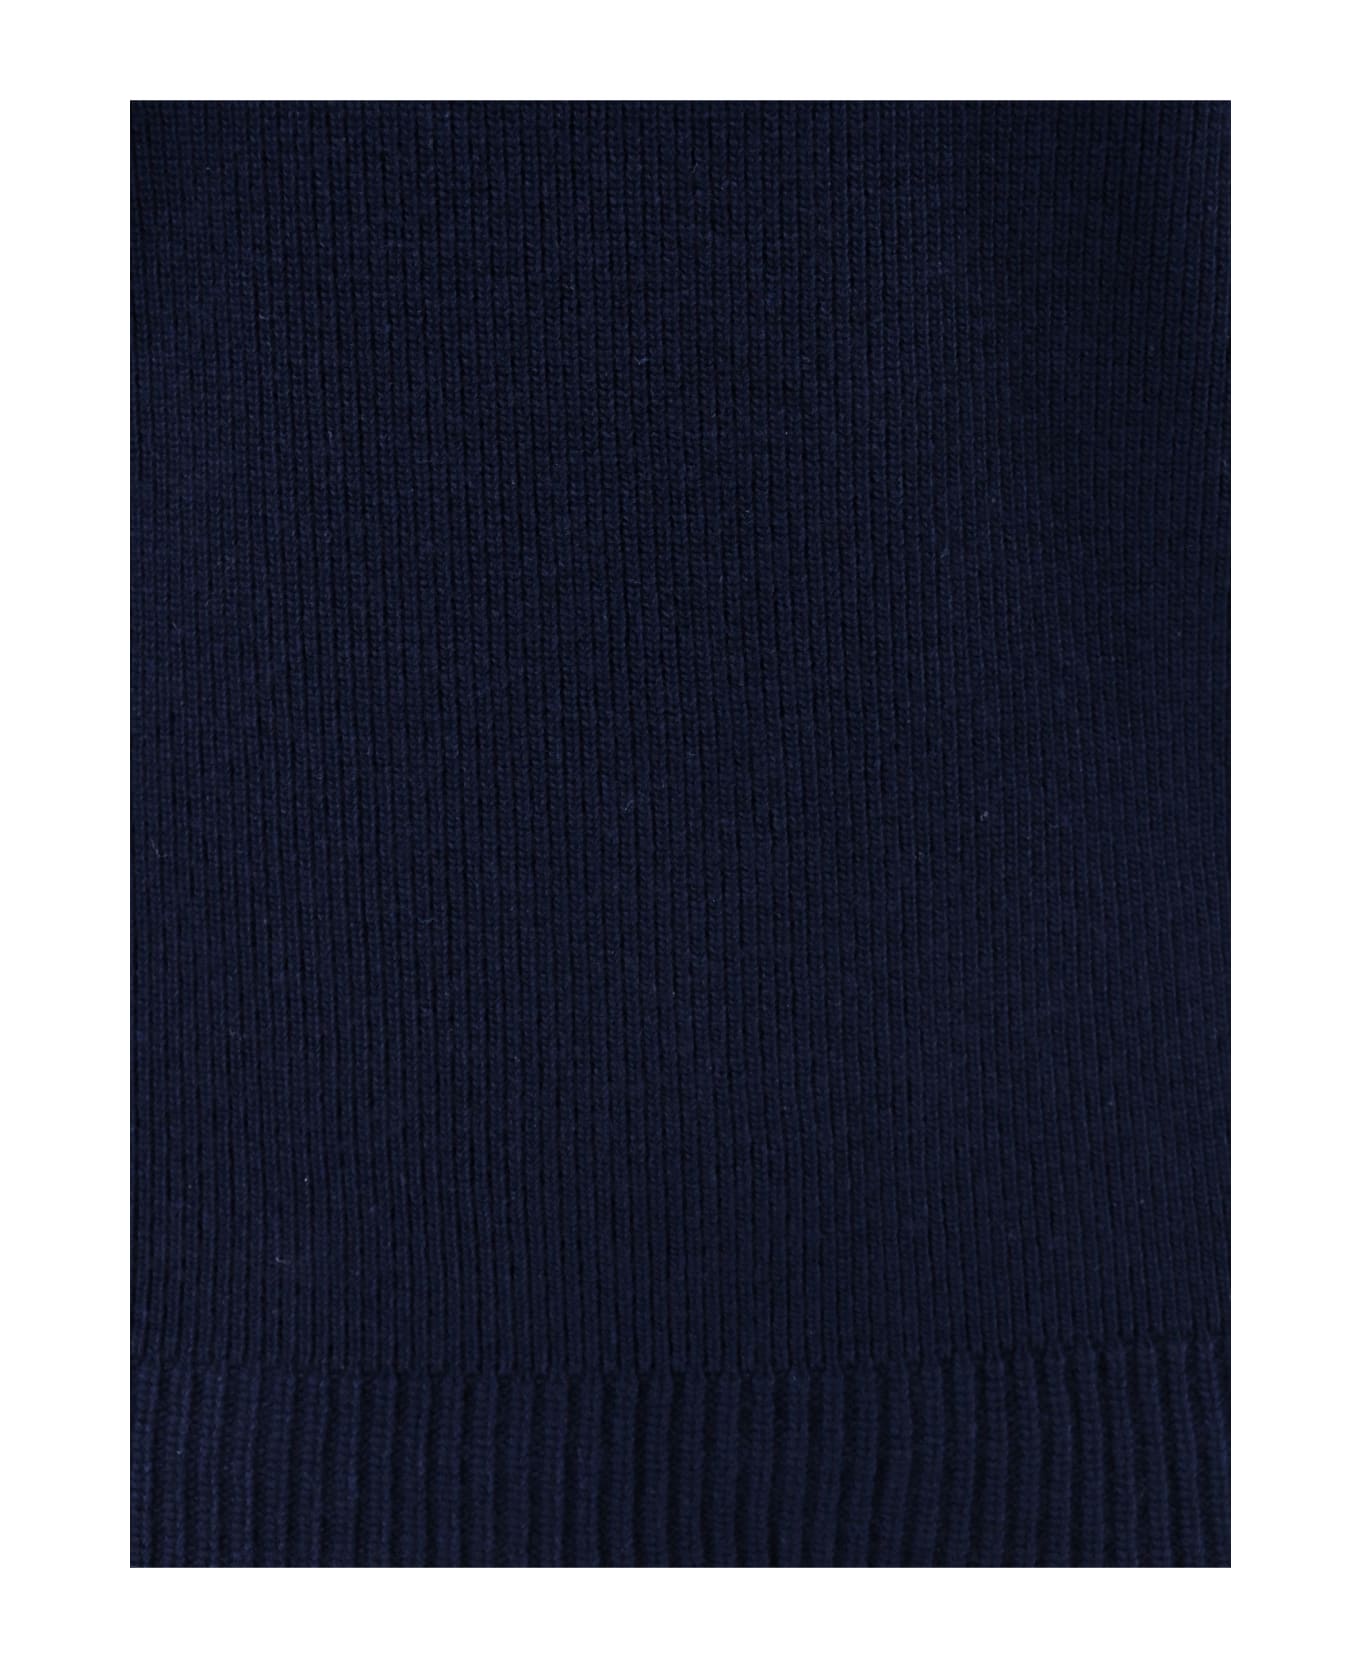 Laneus Sweater - Blue